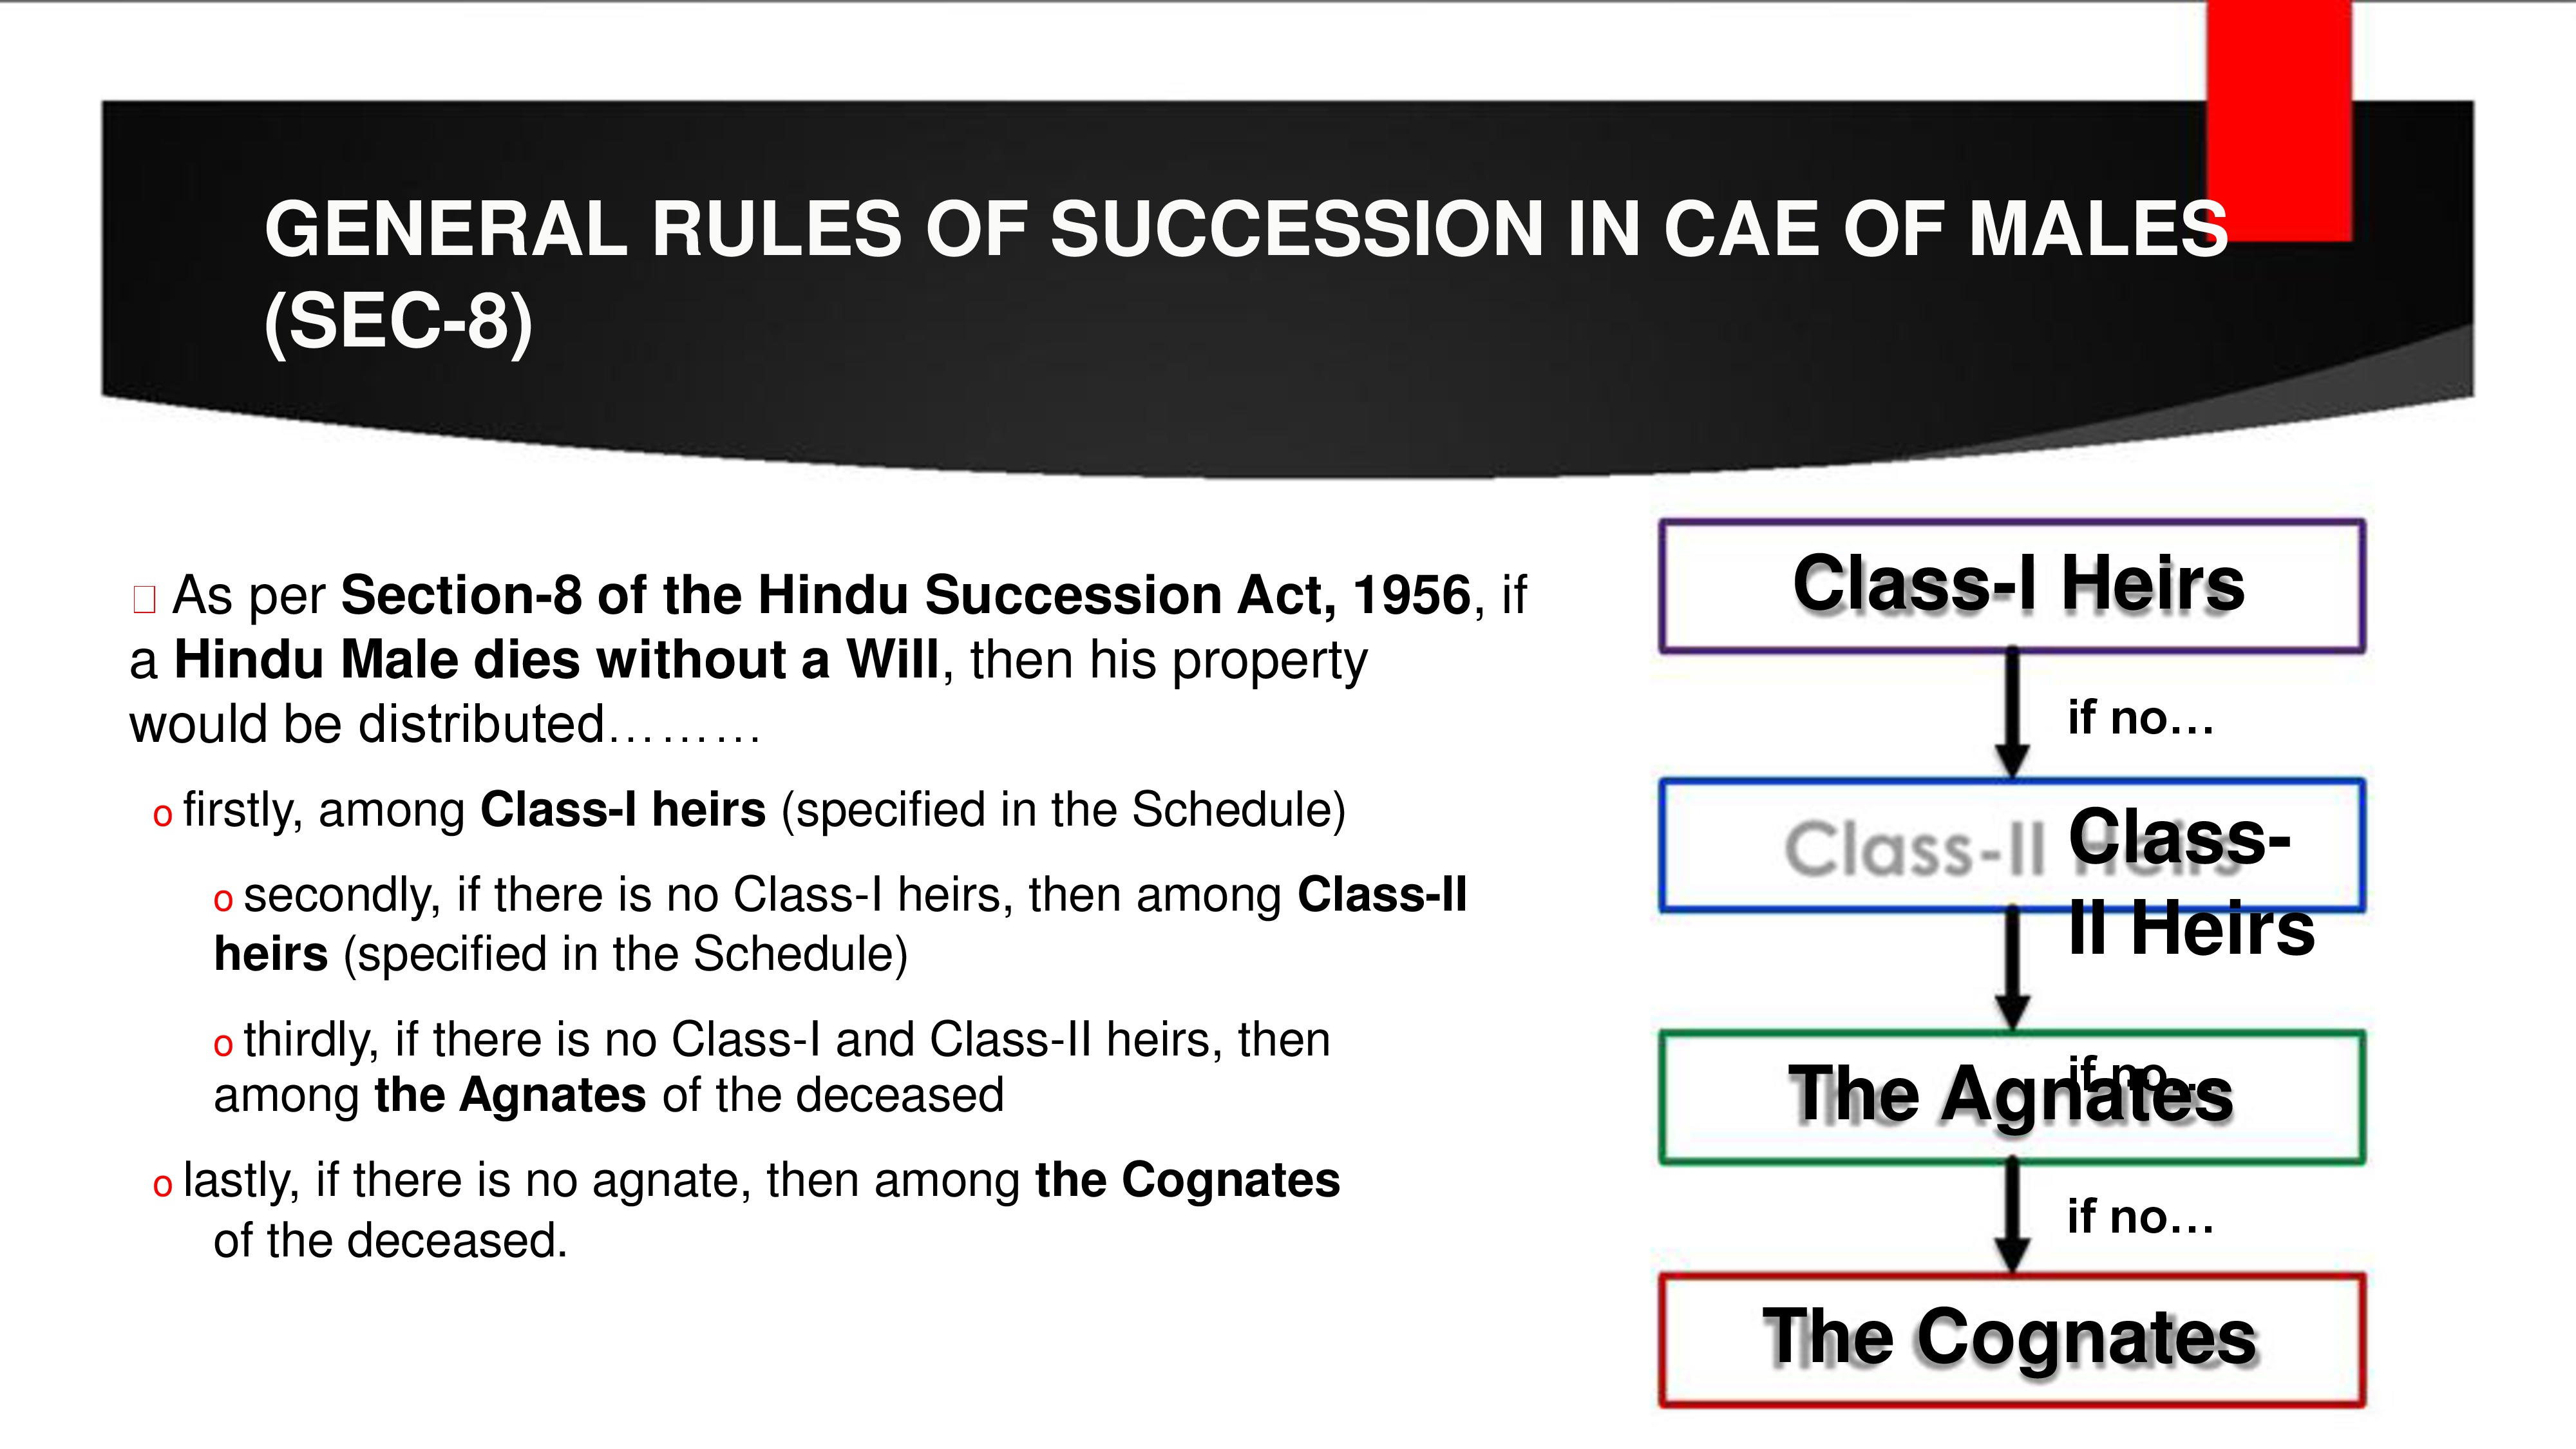 Hindu Succession Act